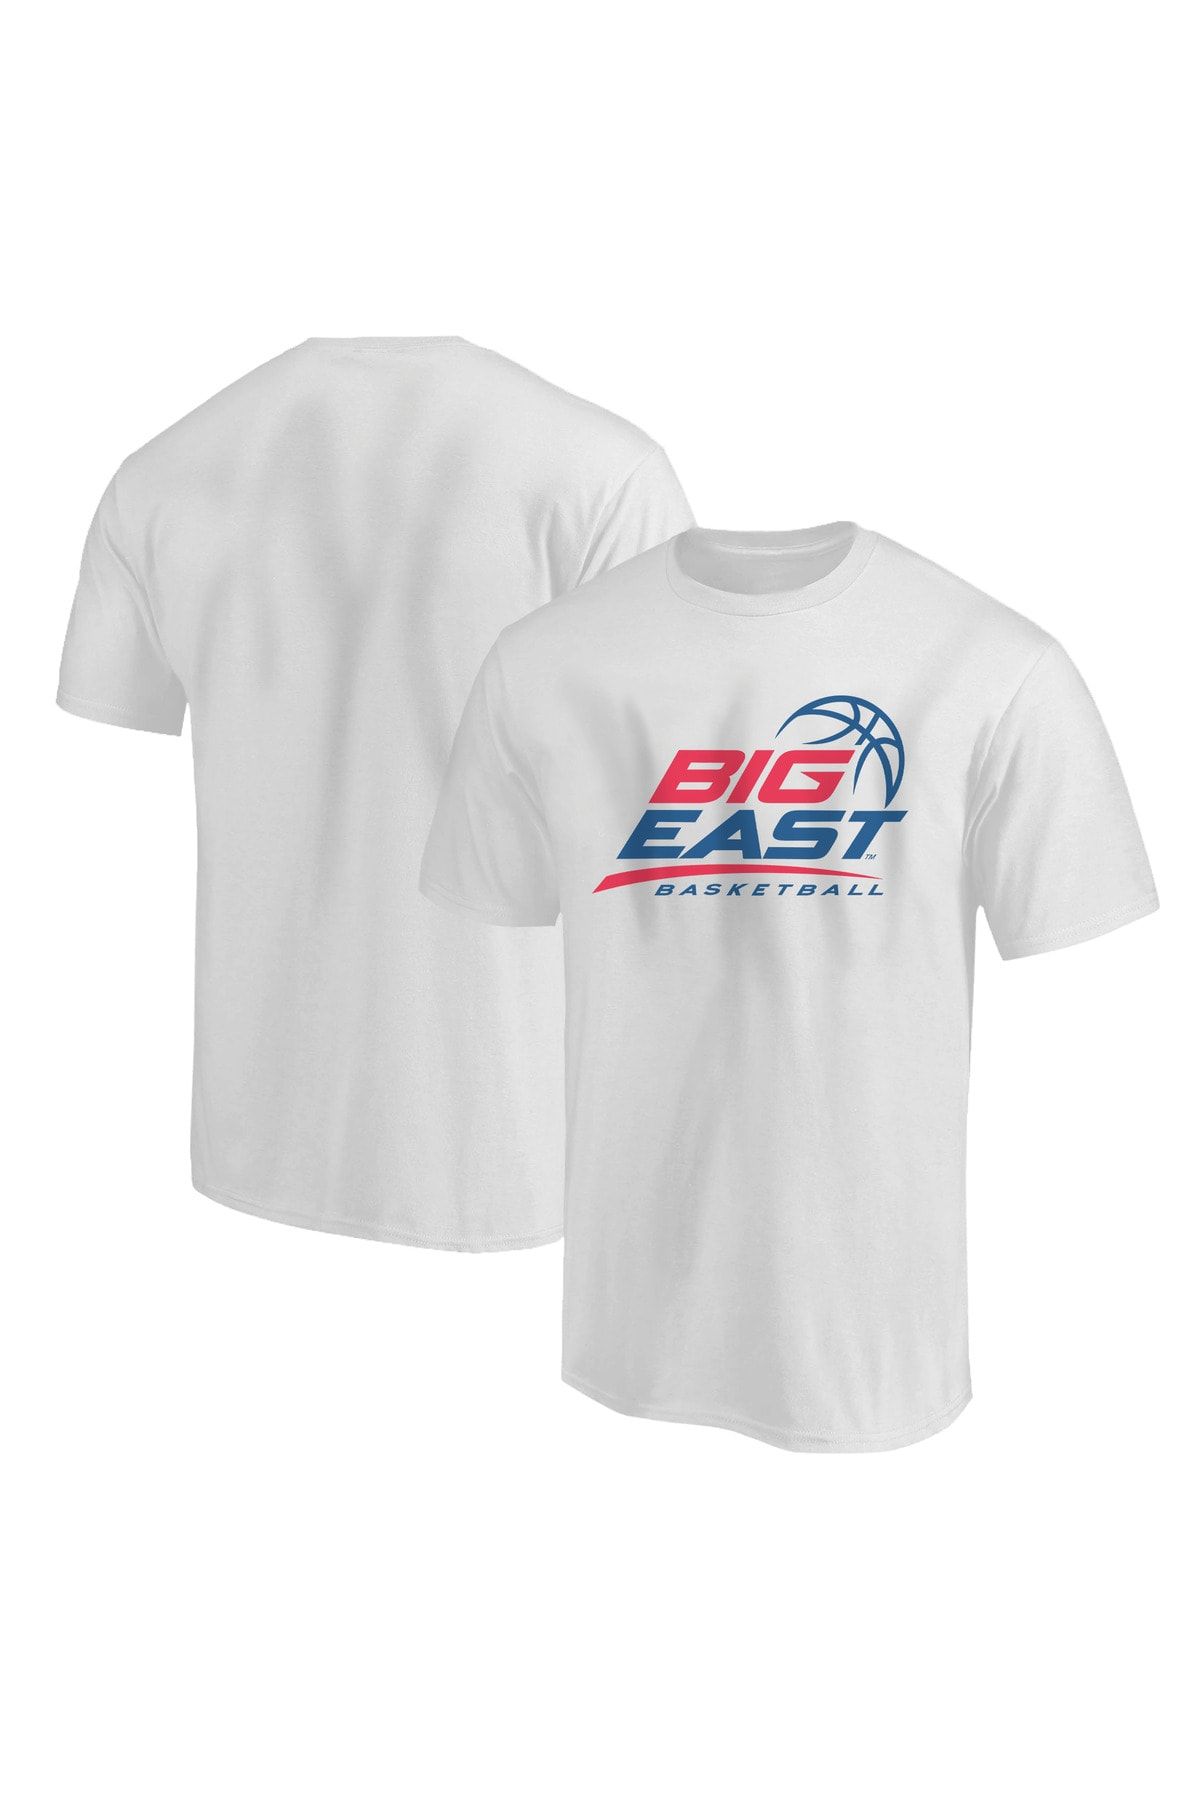 Usateamfans Big East Basketball Tshirt